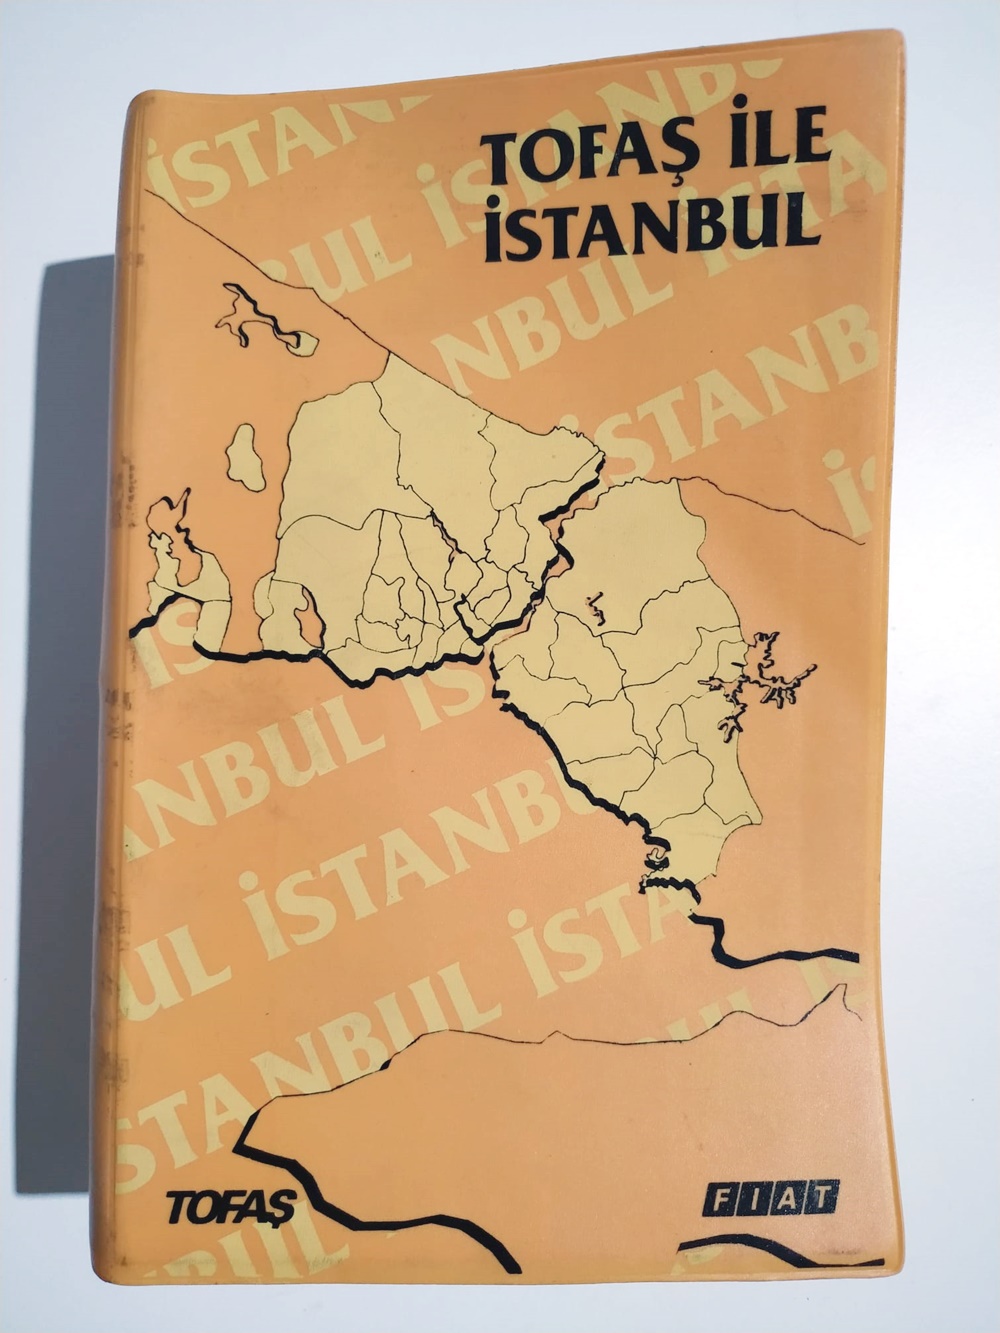 Tofaş İle İstanbul / Kitap